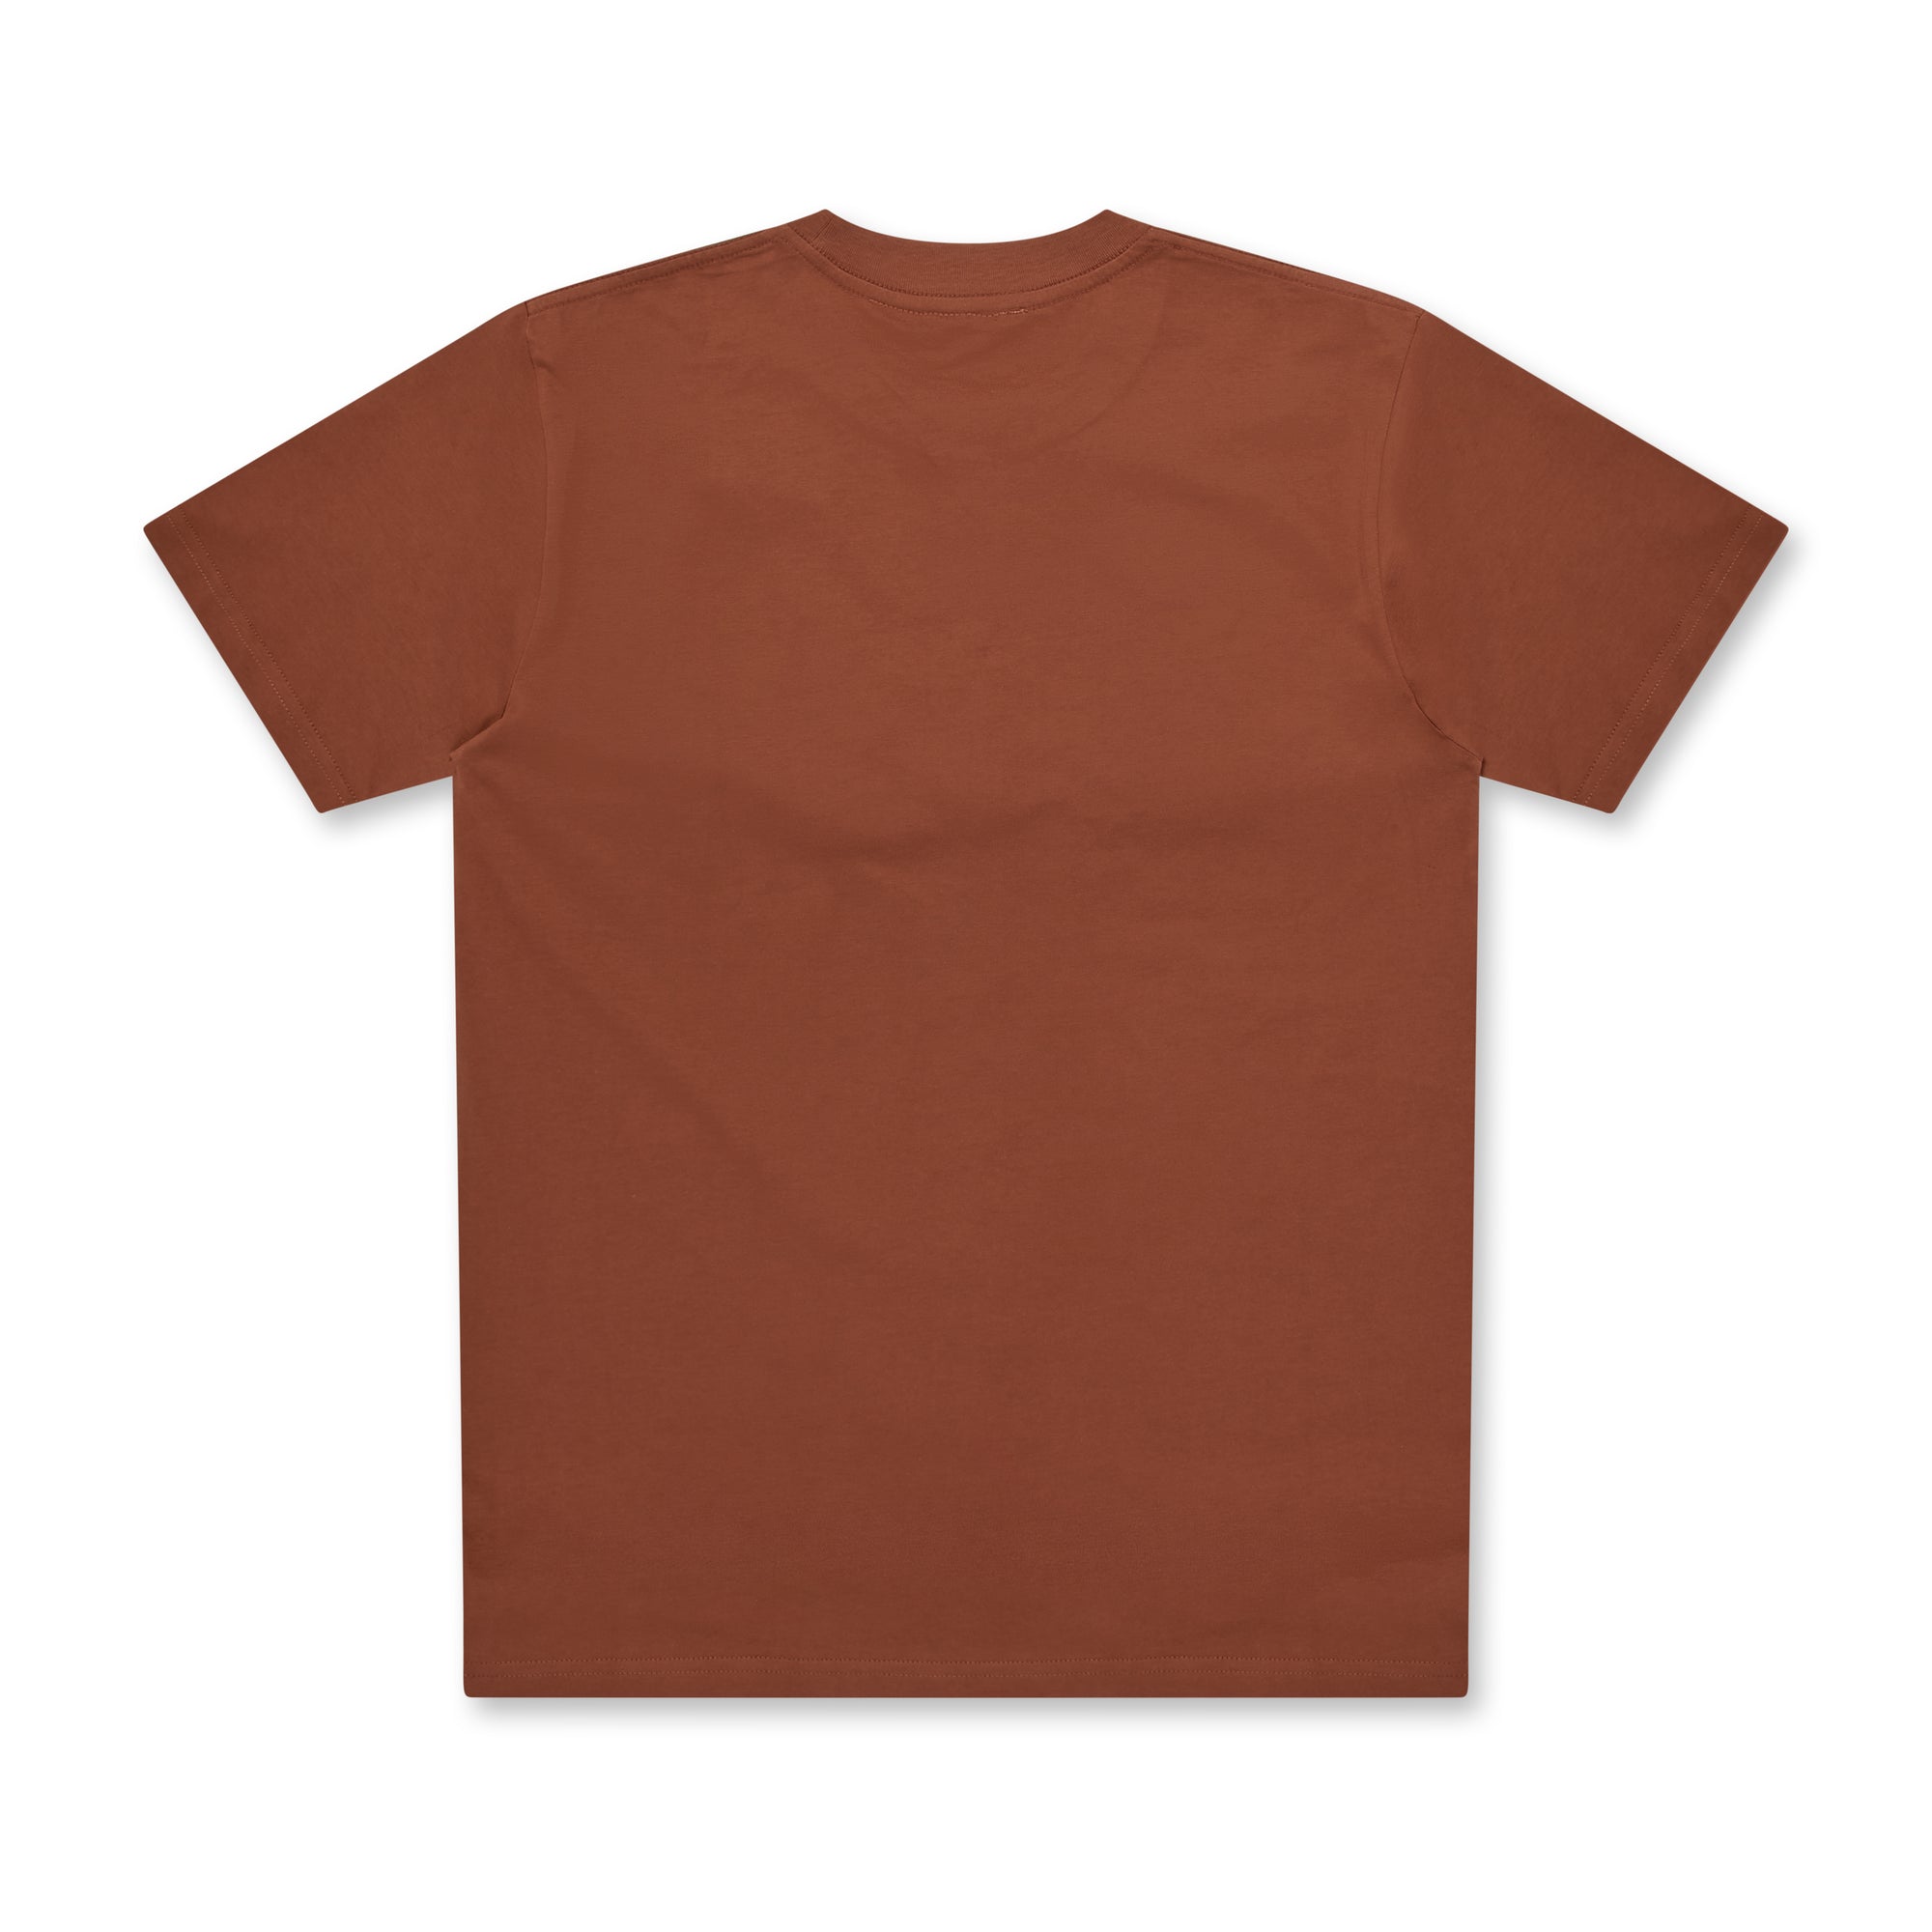 Lifeisunfair - Shit Archive T-Shirt - (Brown) view 2